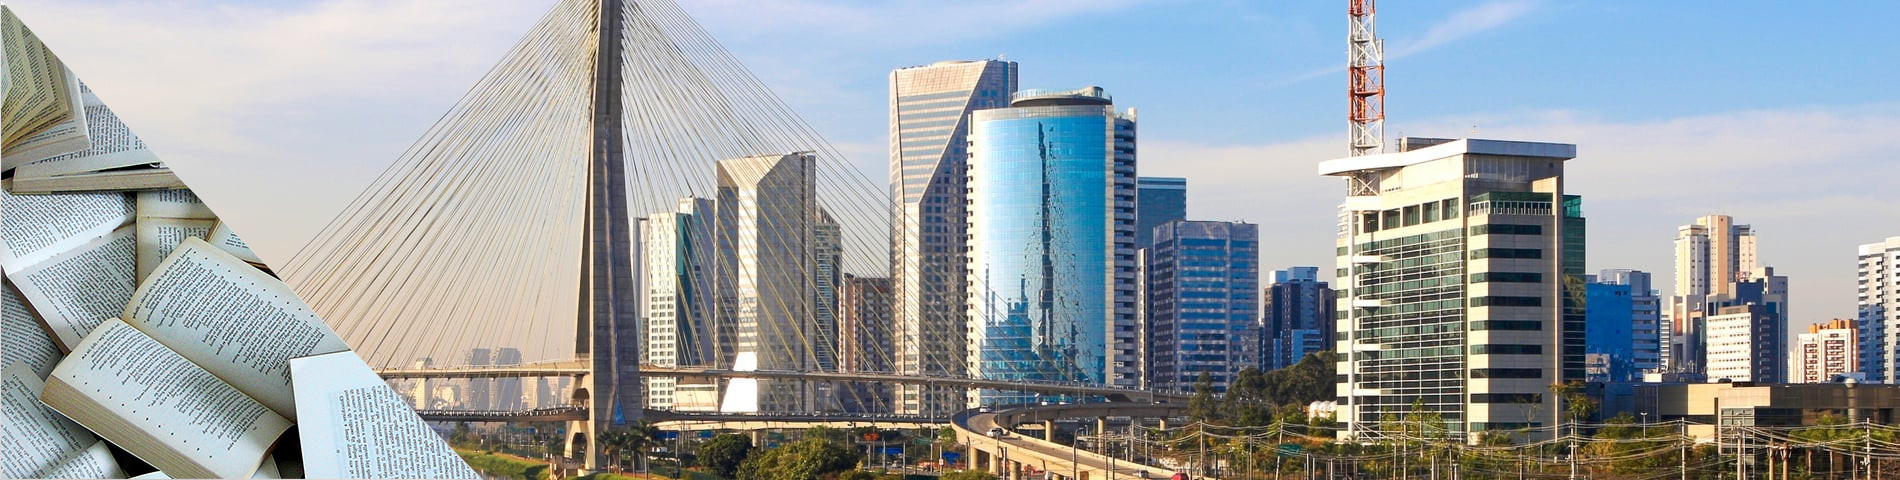 Sao Paulo - Superintensiu (+35h)